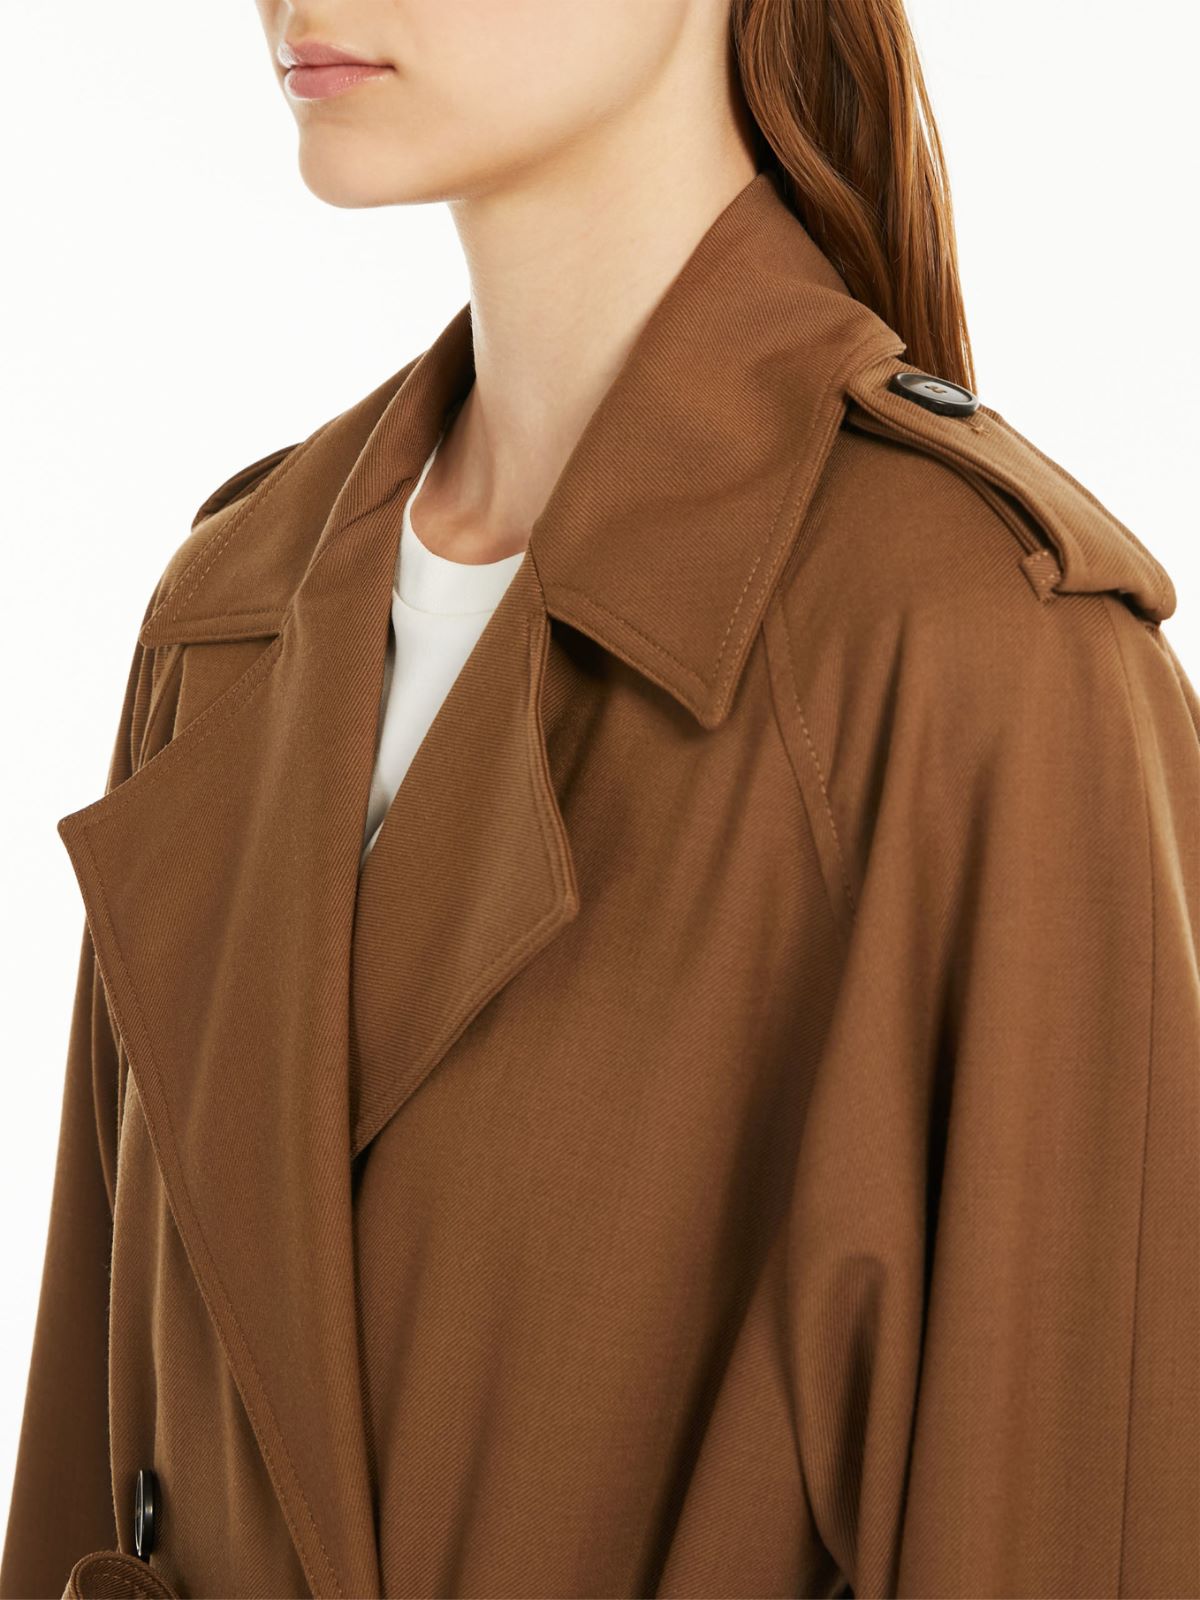 Belted trench coat in showerproof fabric - TOBACCO - Weekend Max Mara - 5